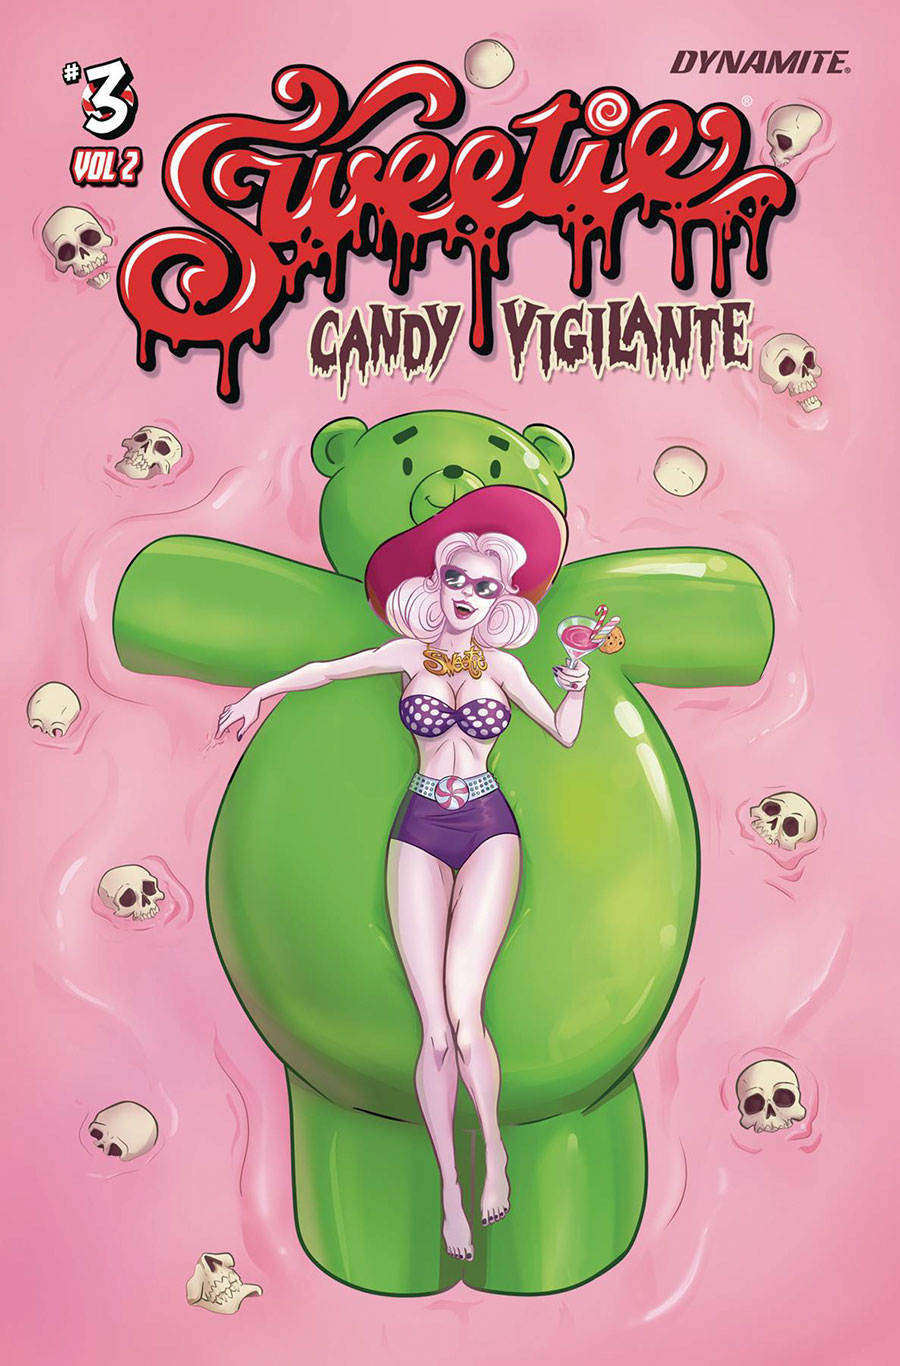 Sweetie Candy Vigilante Vol 2 #3 Cover D Variant Thiago Vale Cover